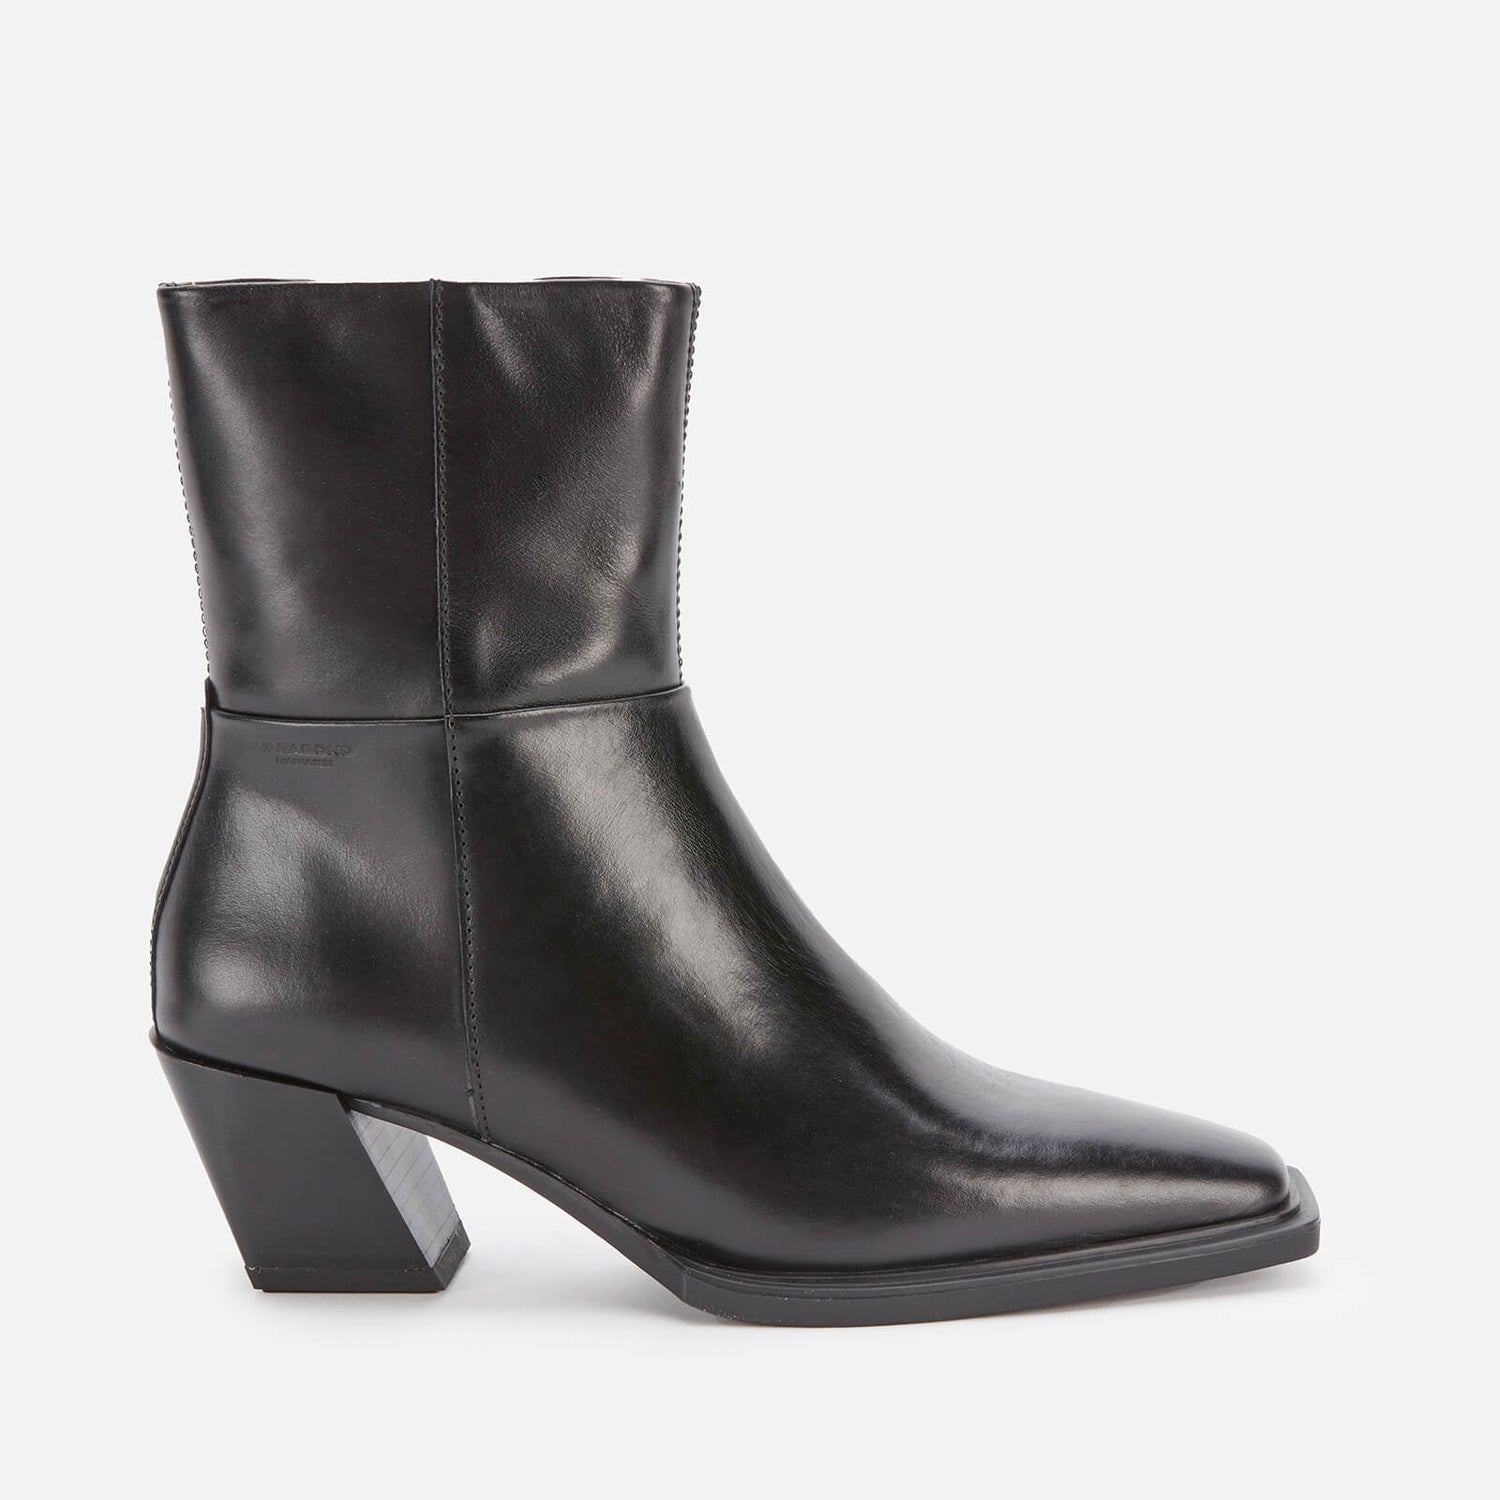 Vagabond Women's Alina Leather Heeled Boots - Black - UK 3